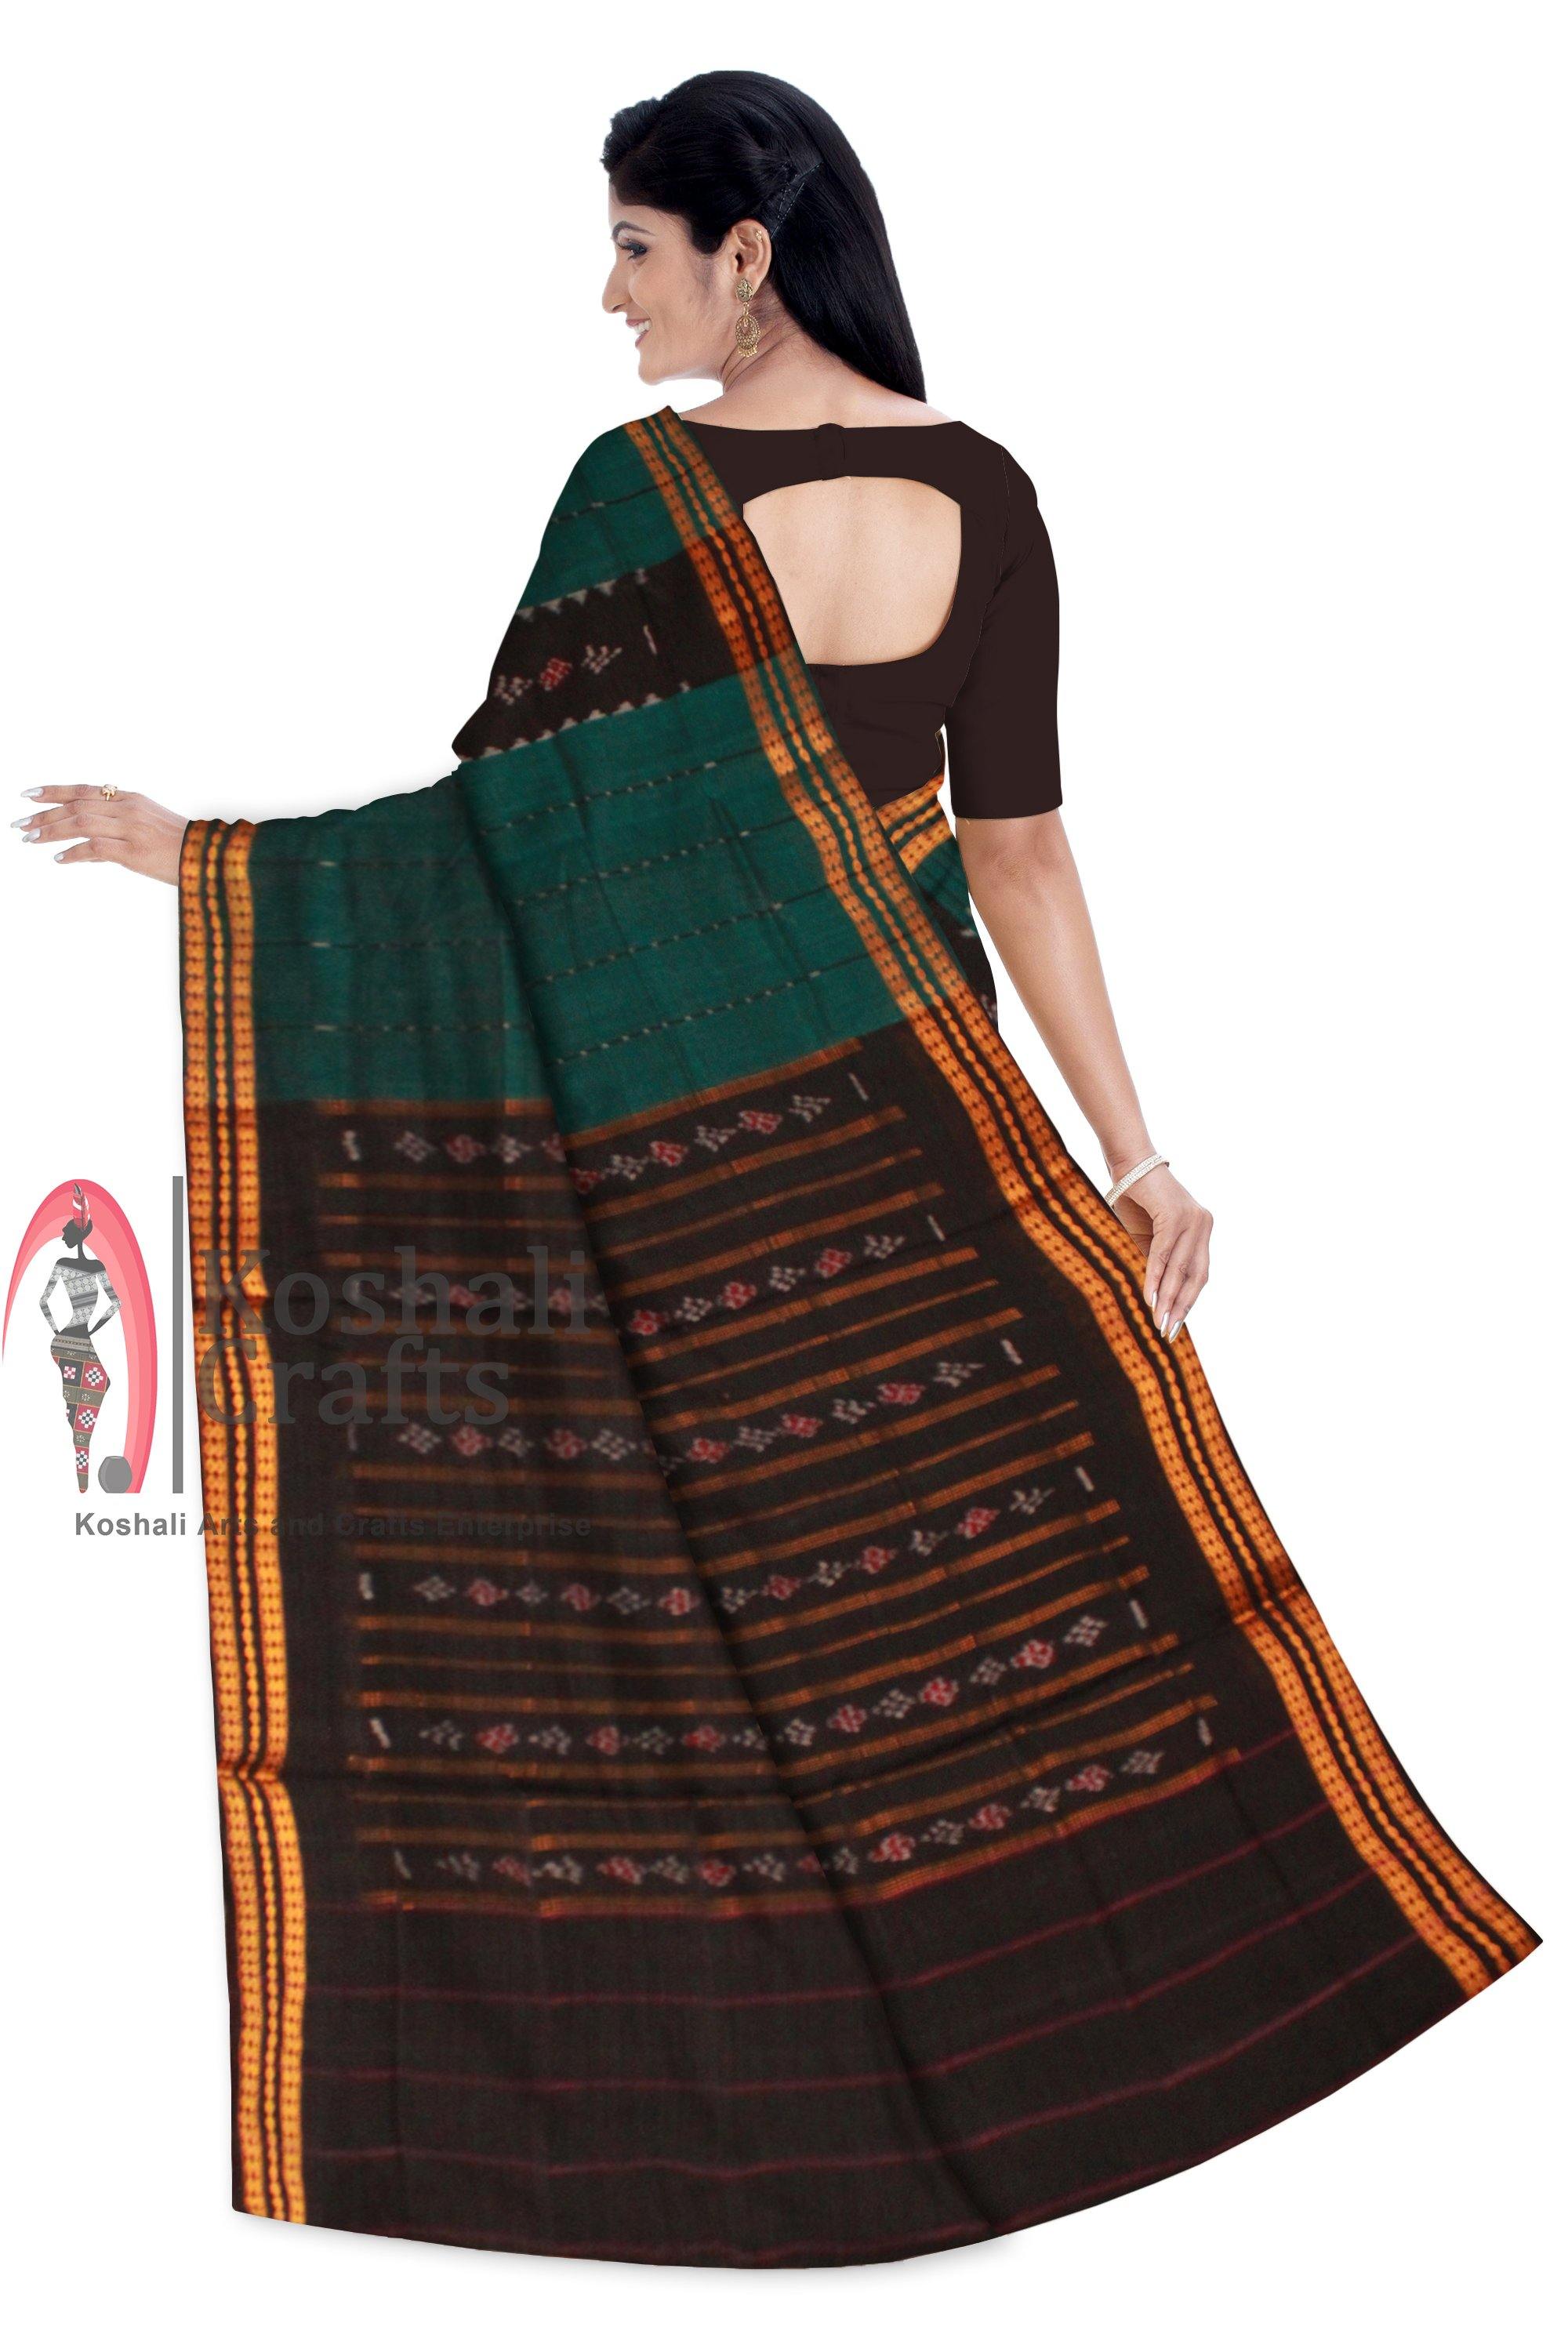 Green color sambalpuri cotton saree, without Blouse piece. - Koshali Arts & Crafts Enterprise